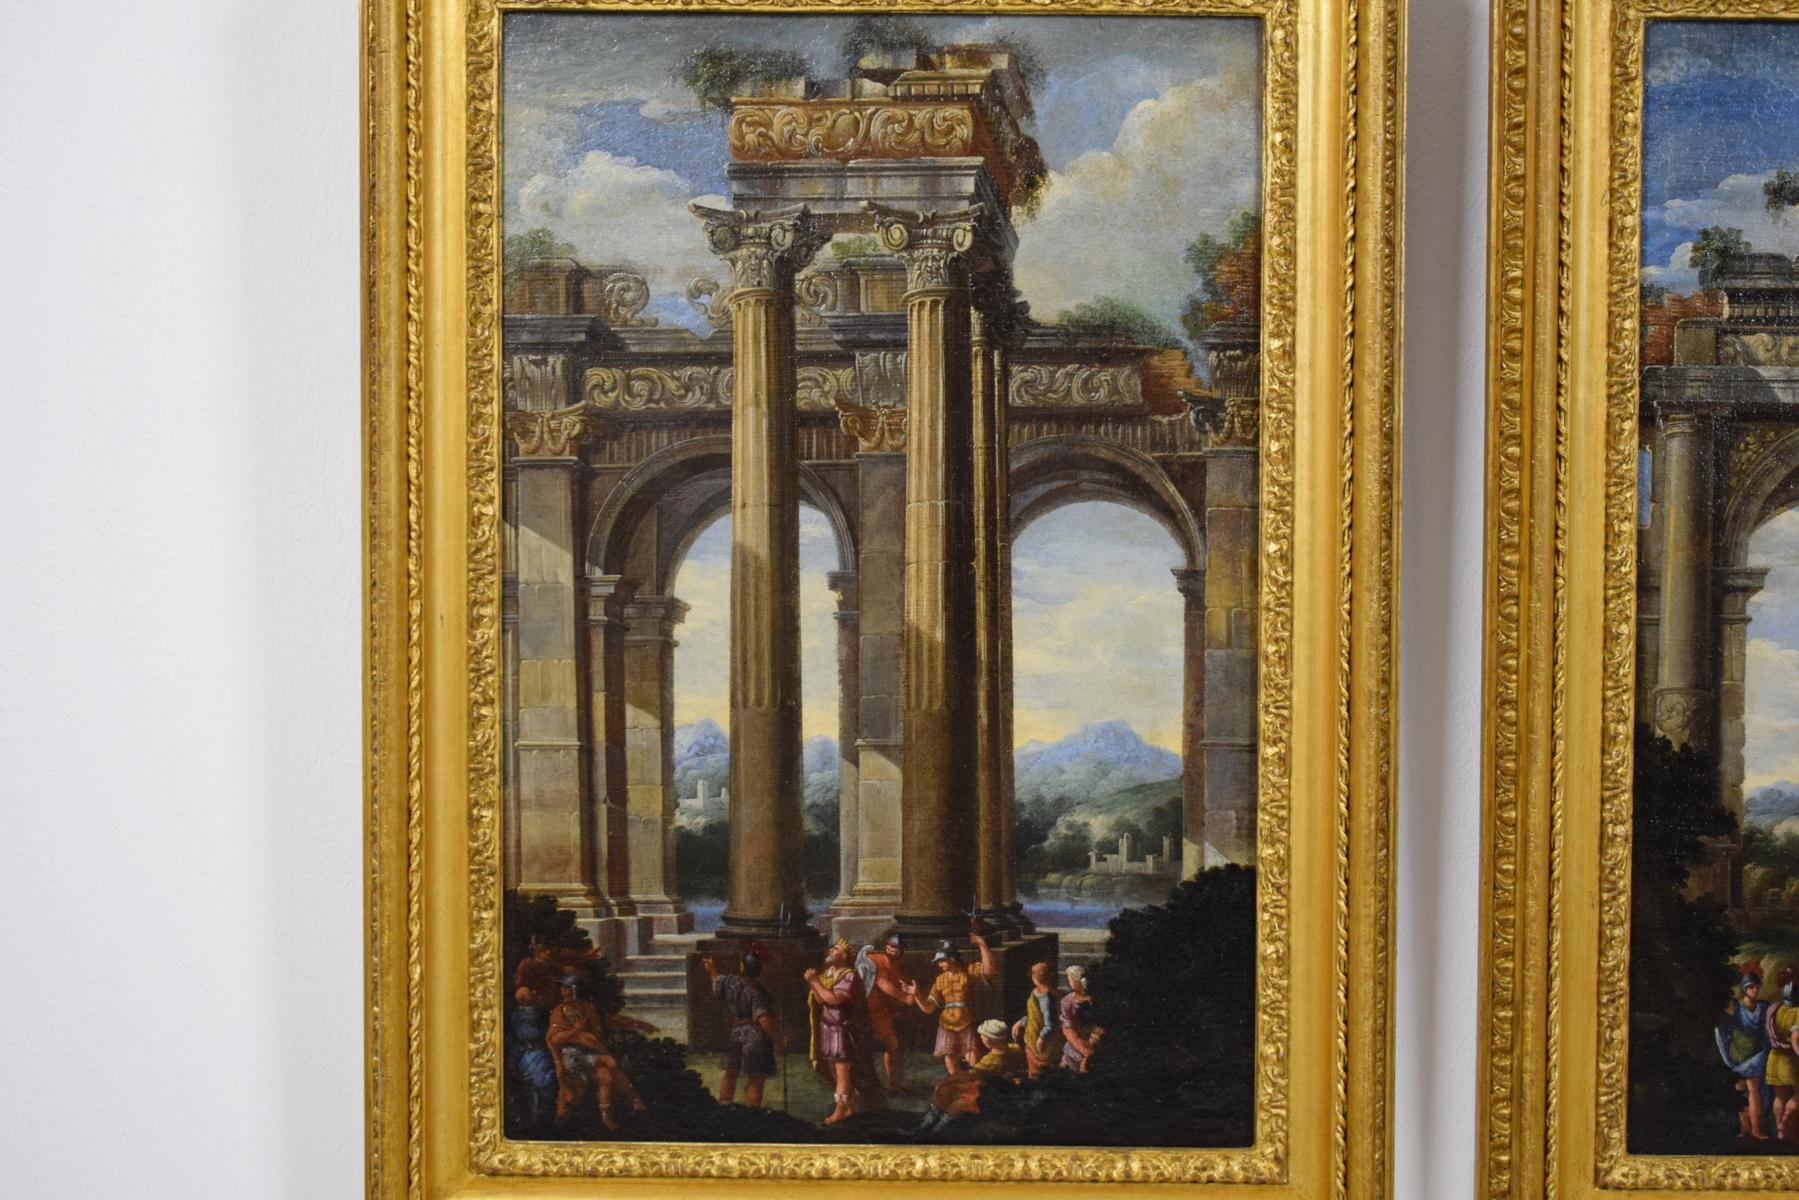 Canvas Repentance and Sacrifice of King David, Alberto Carlieri 'Rome 1672-1720'